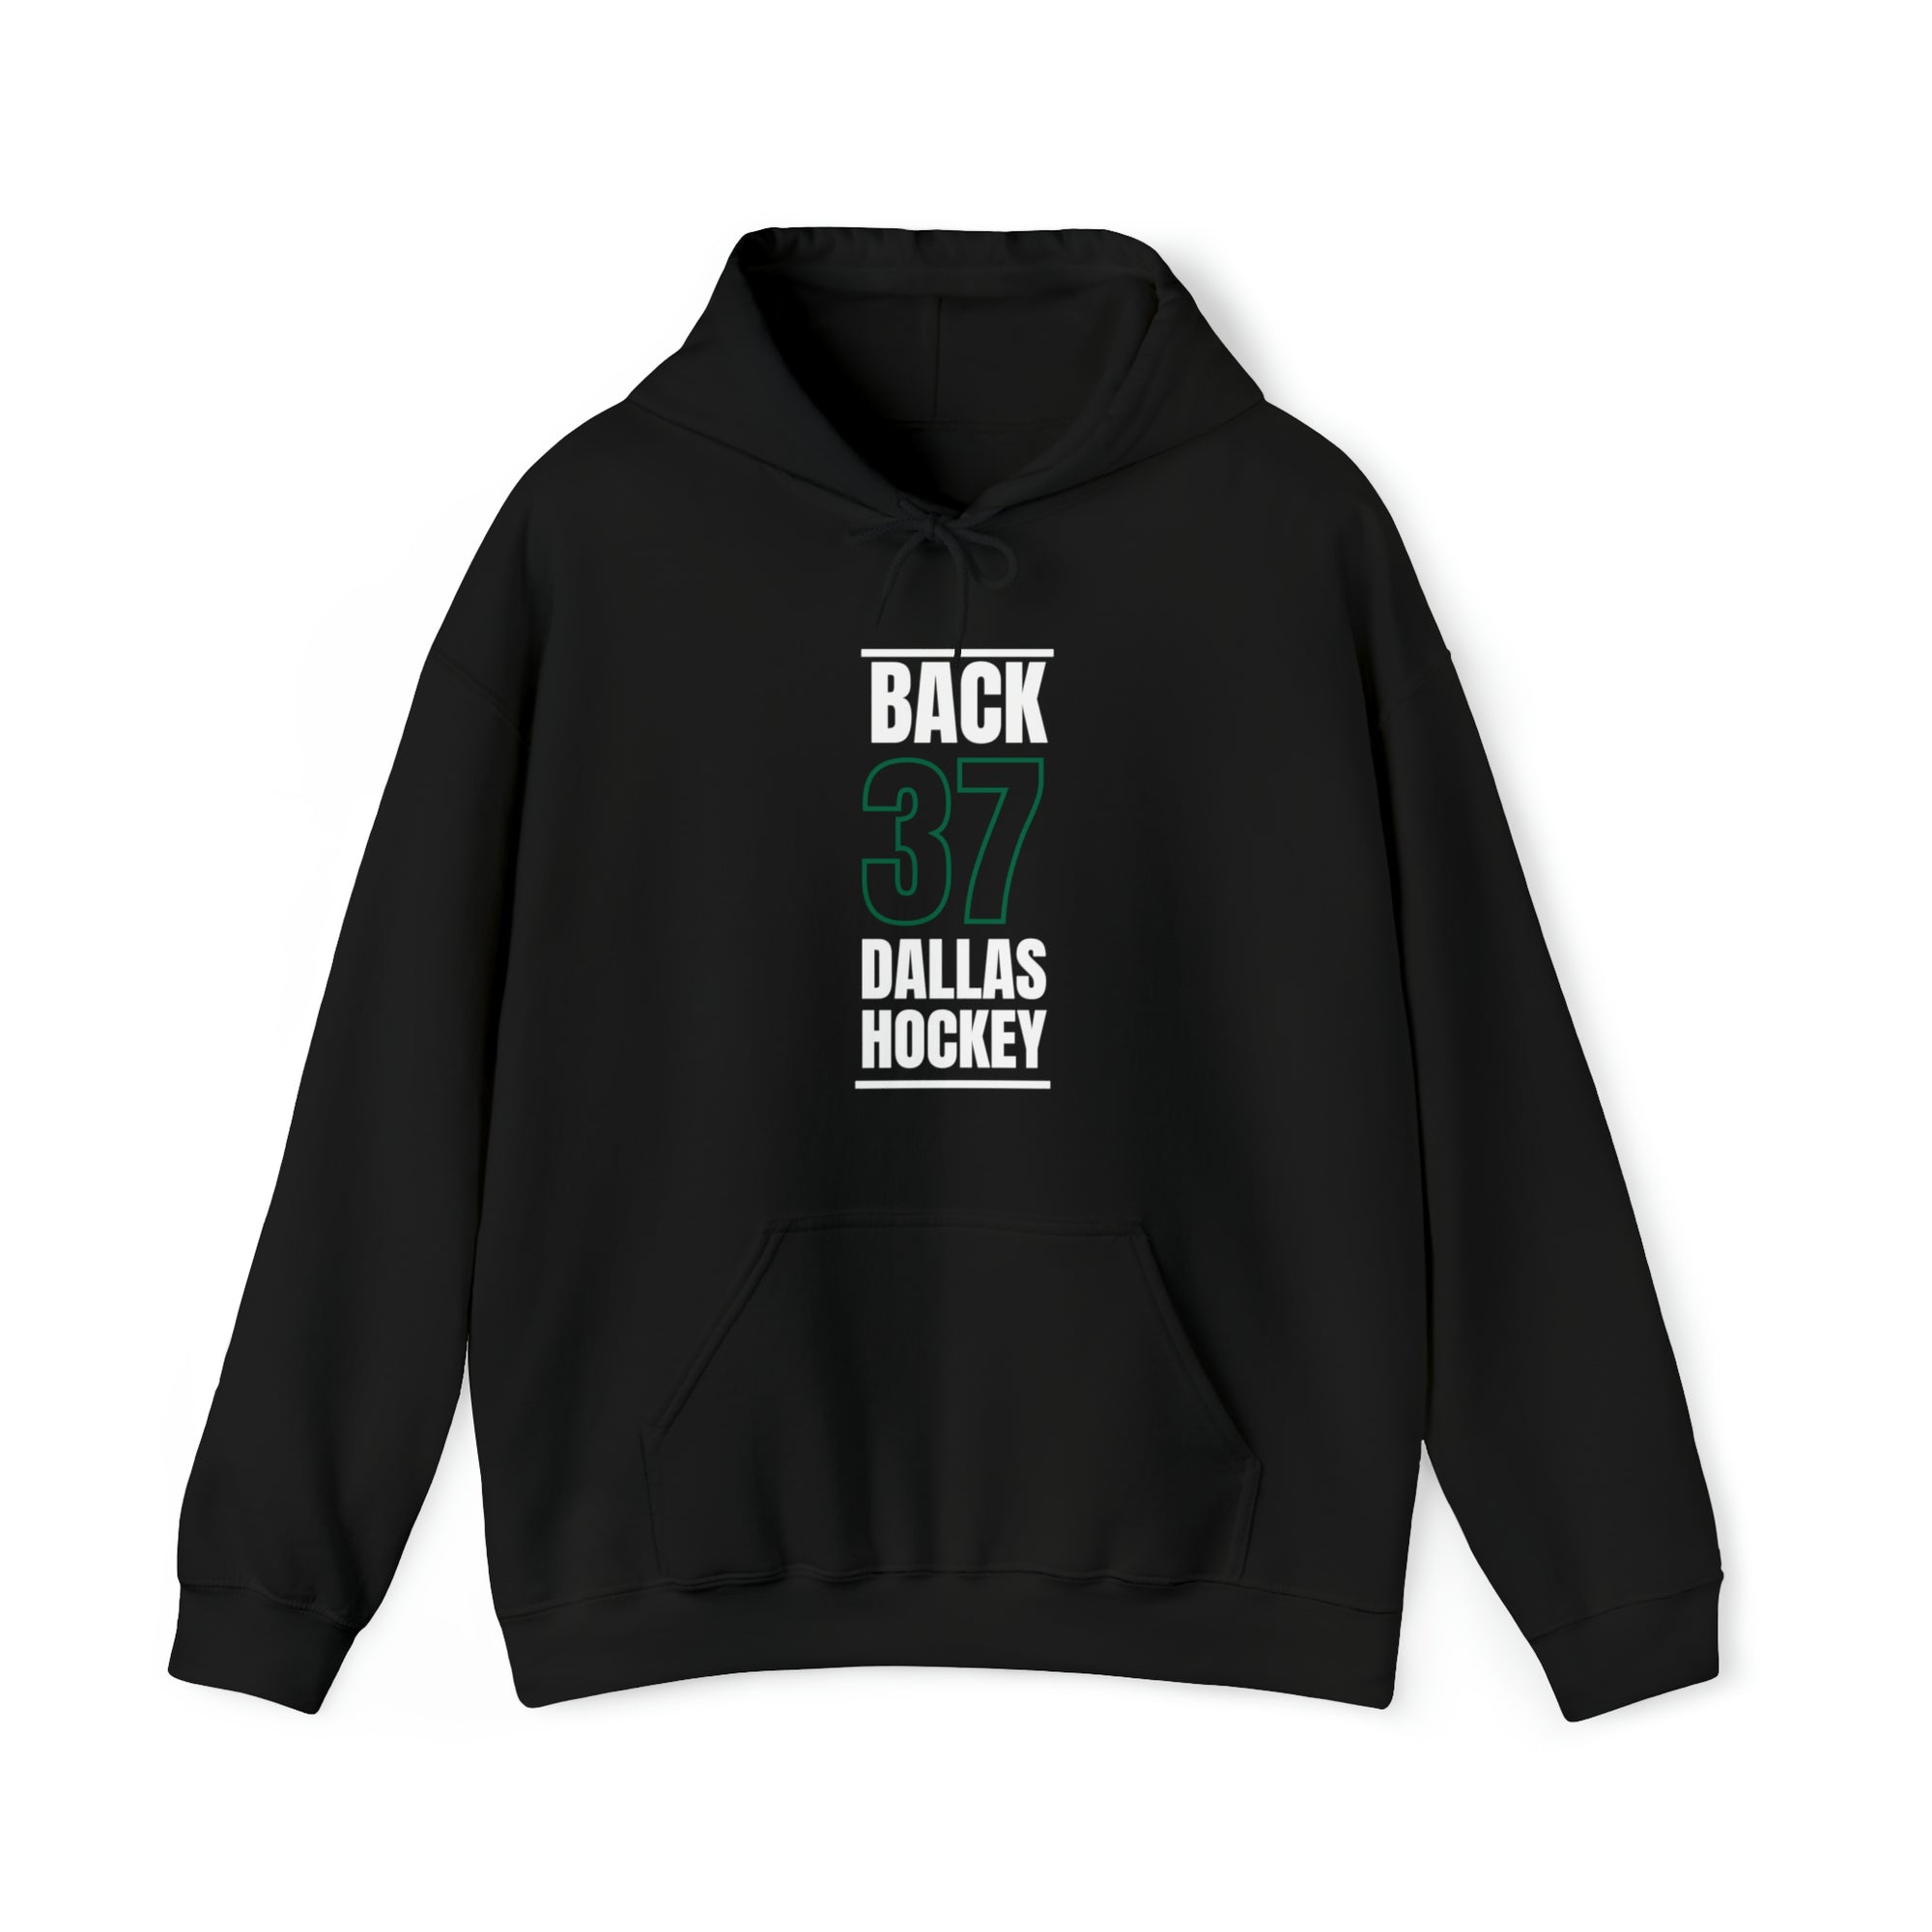 Back 37 Dallas Hockey Black Vertical Design Unisex Hooded Sweatshirt